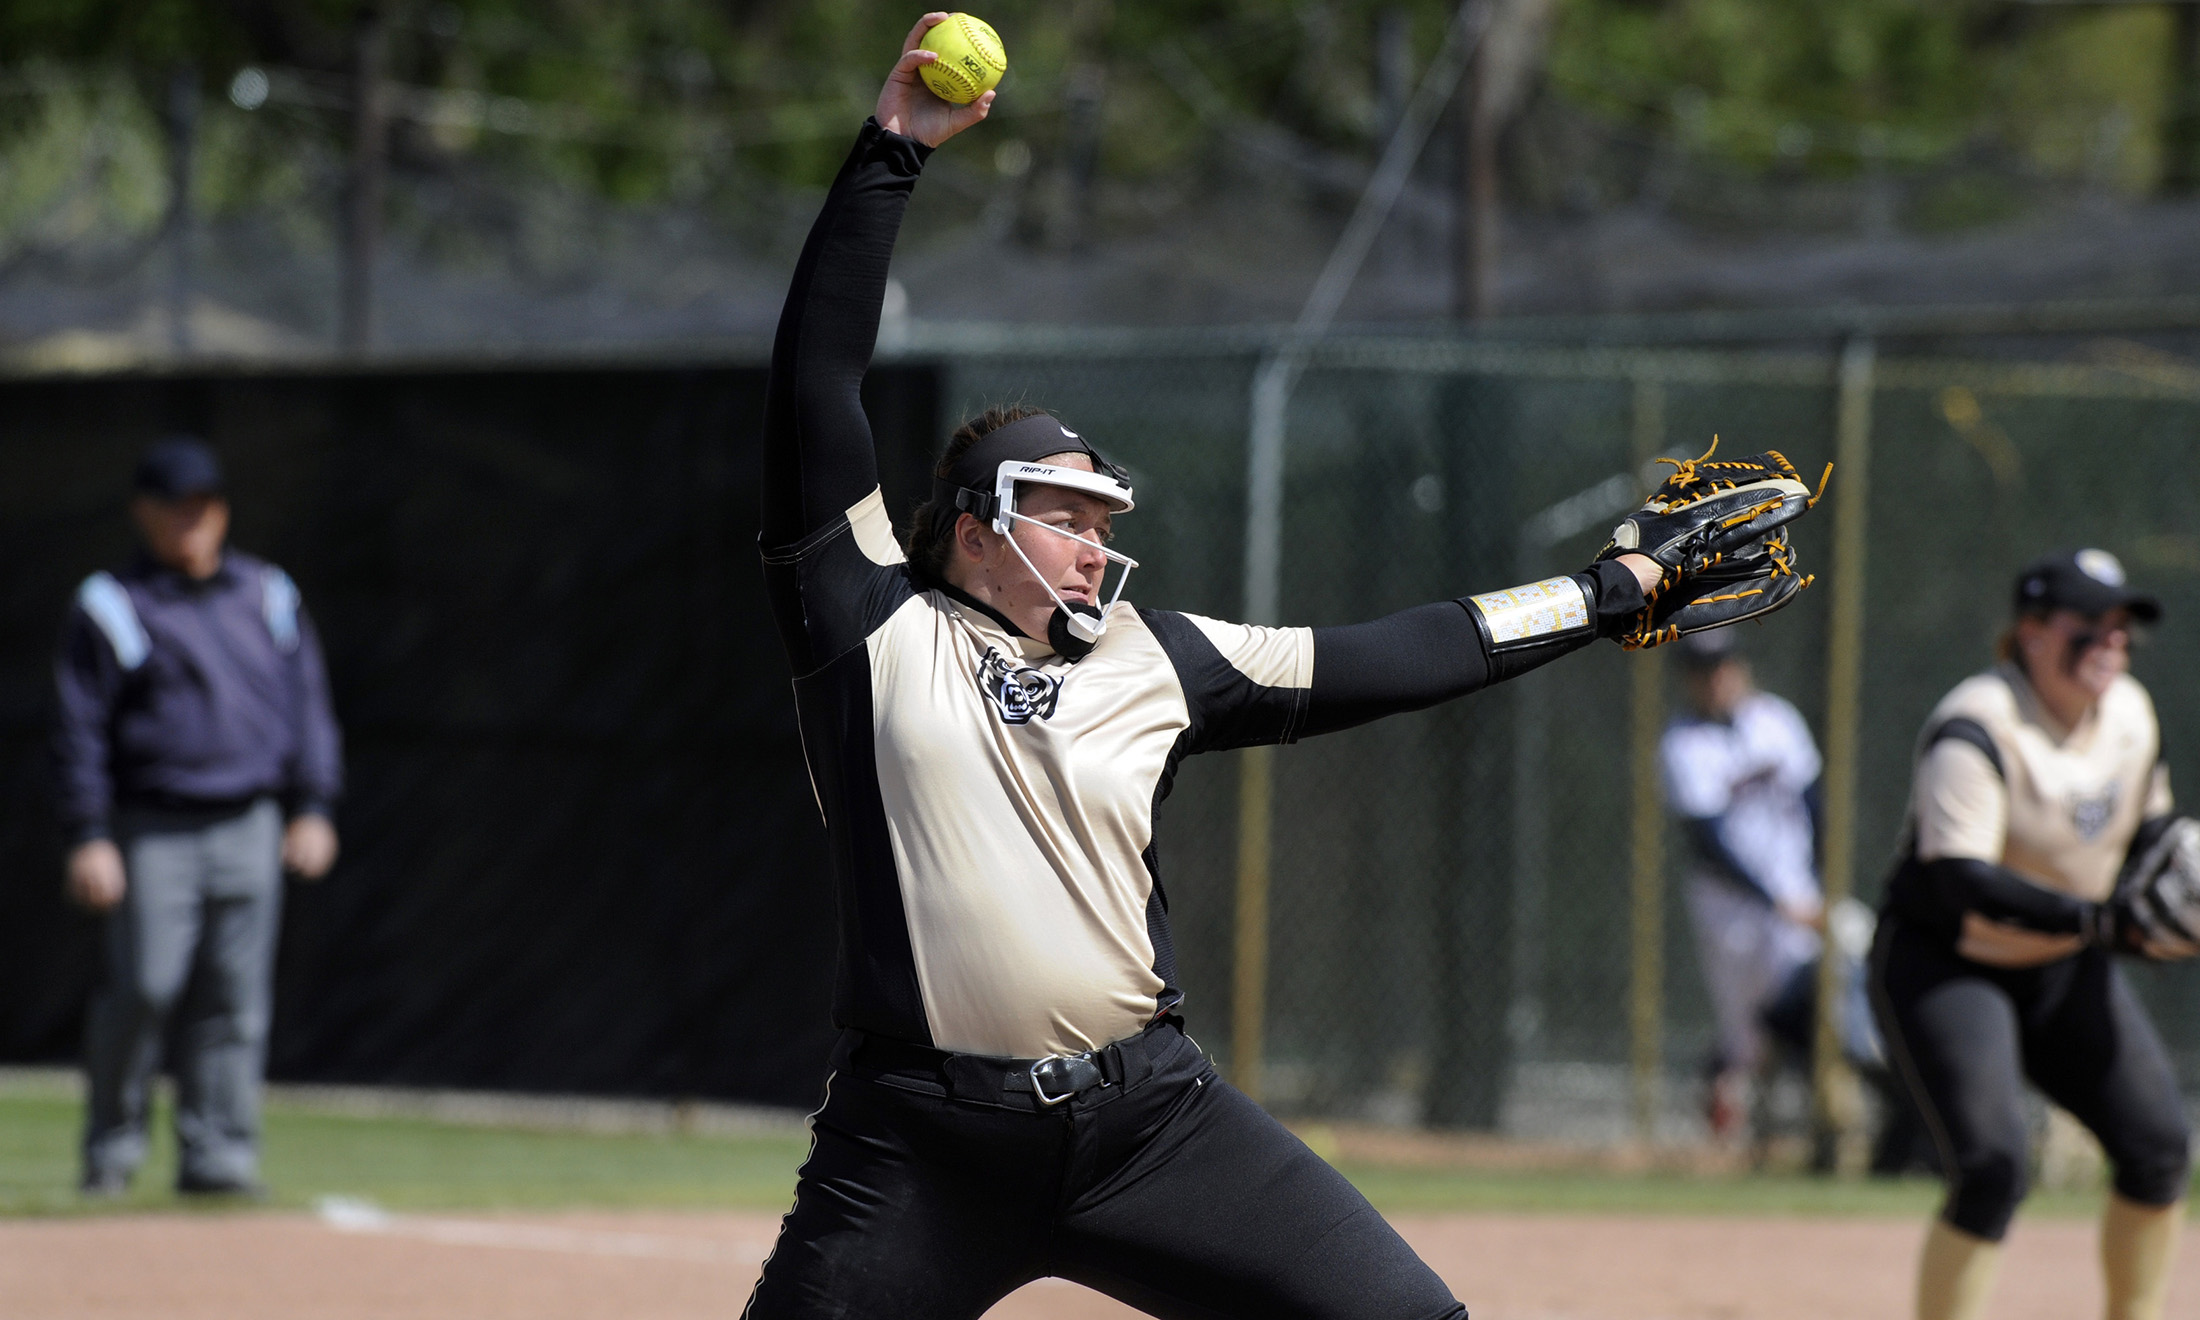 Oakland University softball star Erin Kownacki throws a pitch